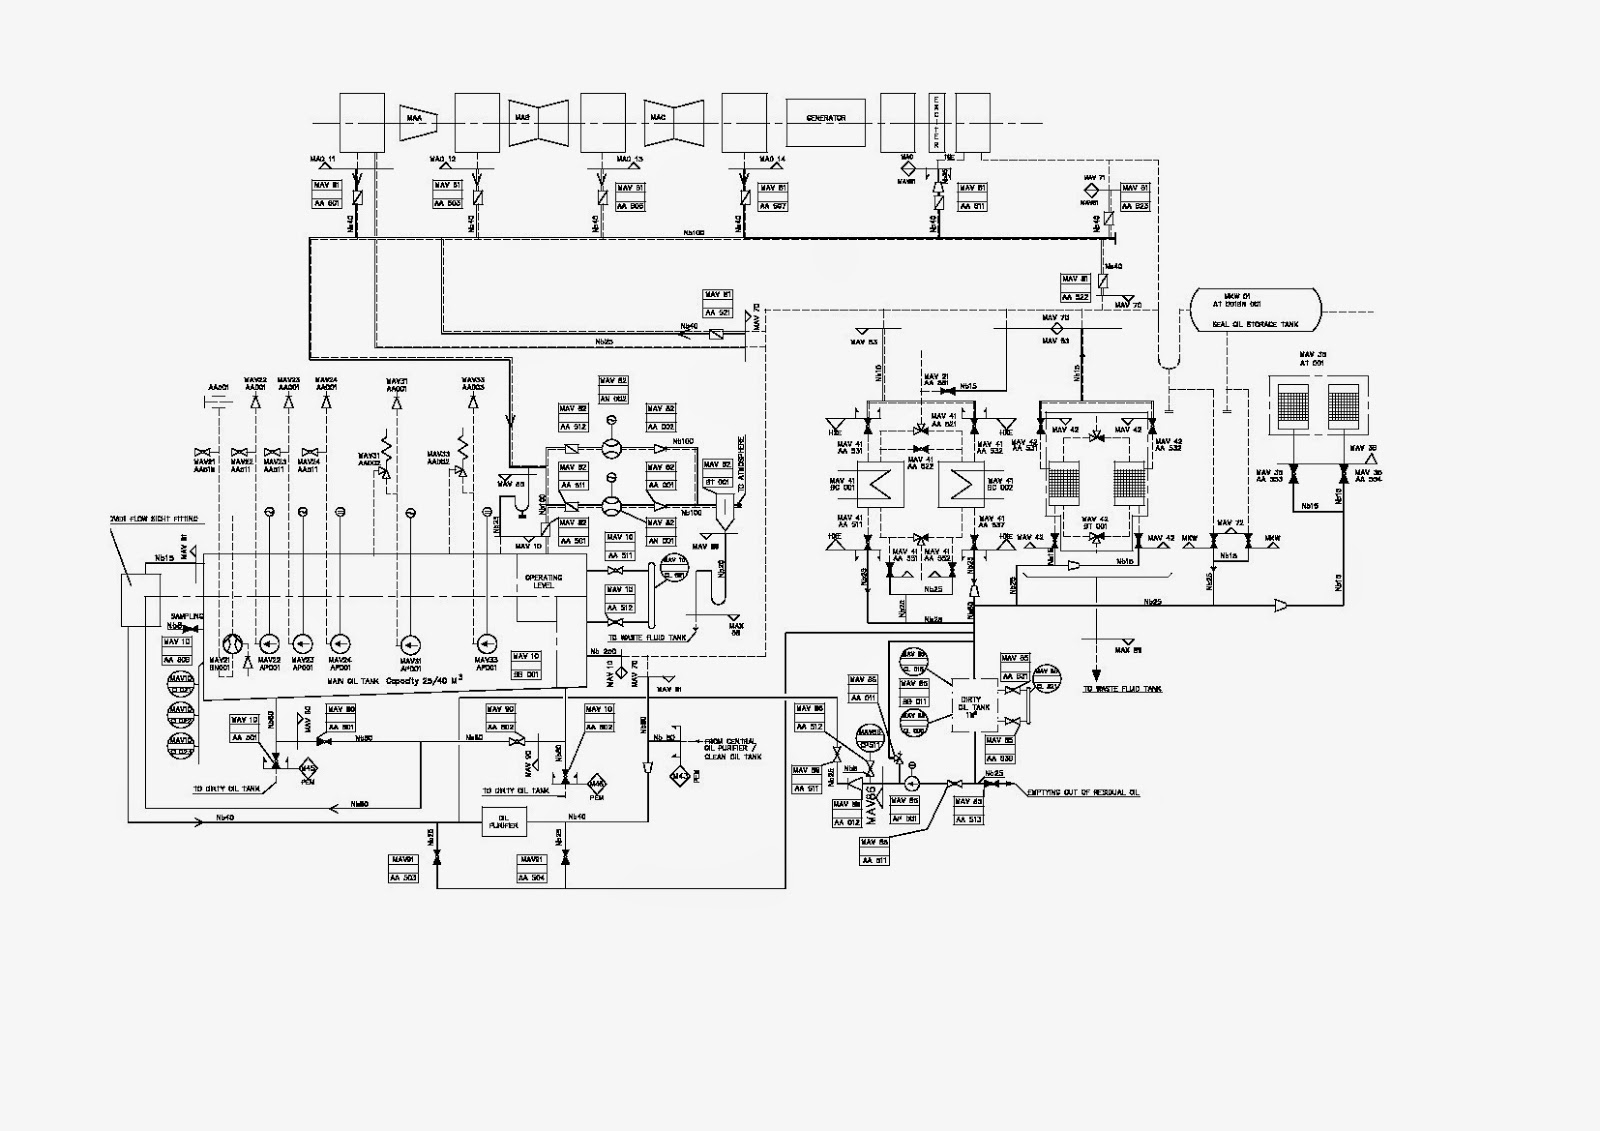 Power Plant Diagram 500 Mw Power Plant Diagram Wiring Library